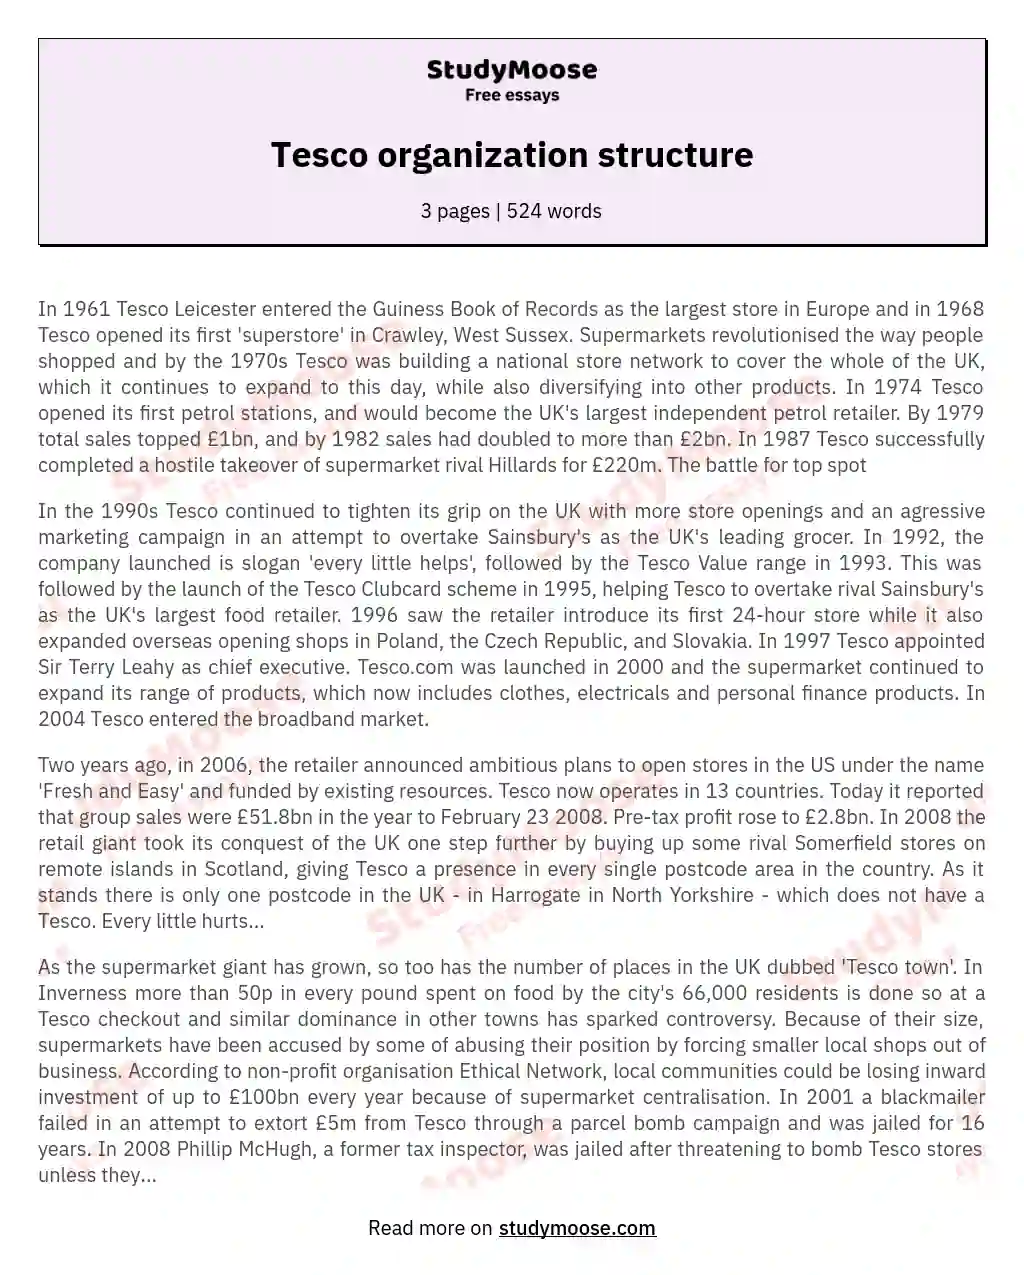 Tesco organization structure essay